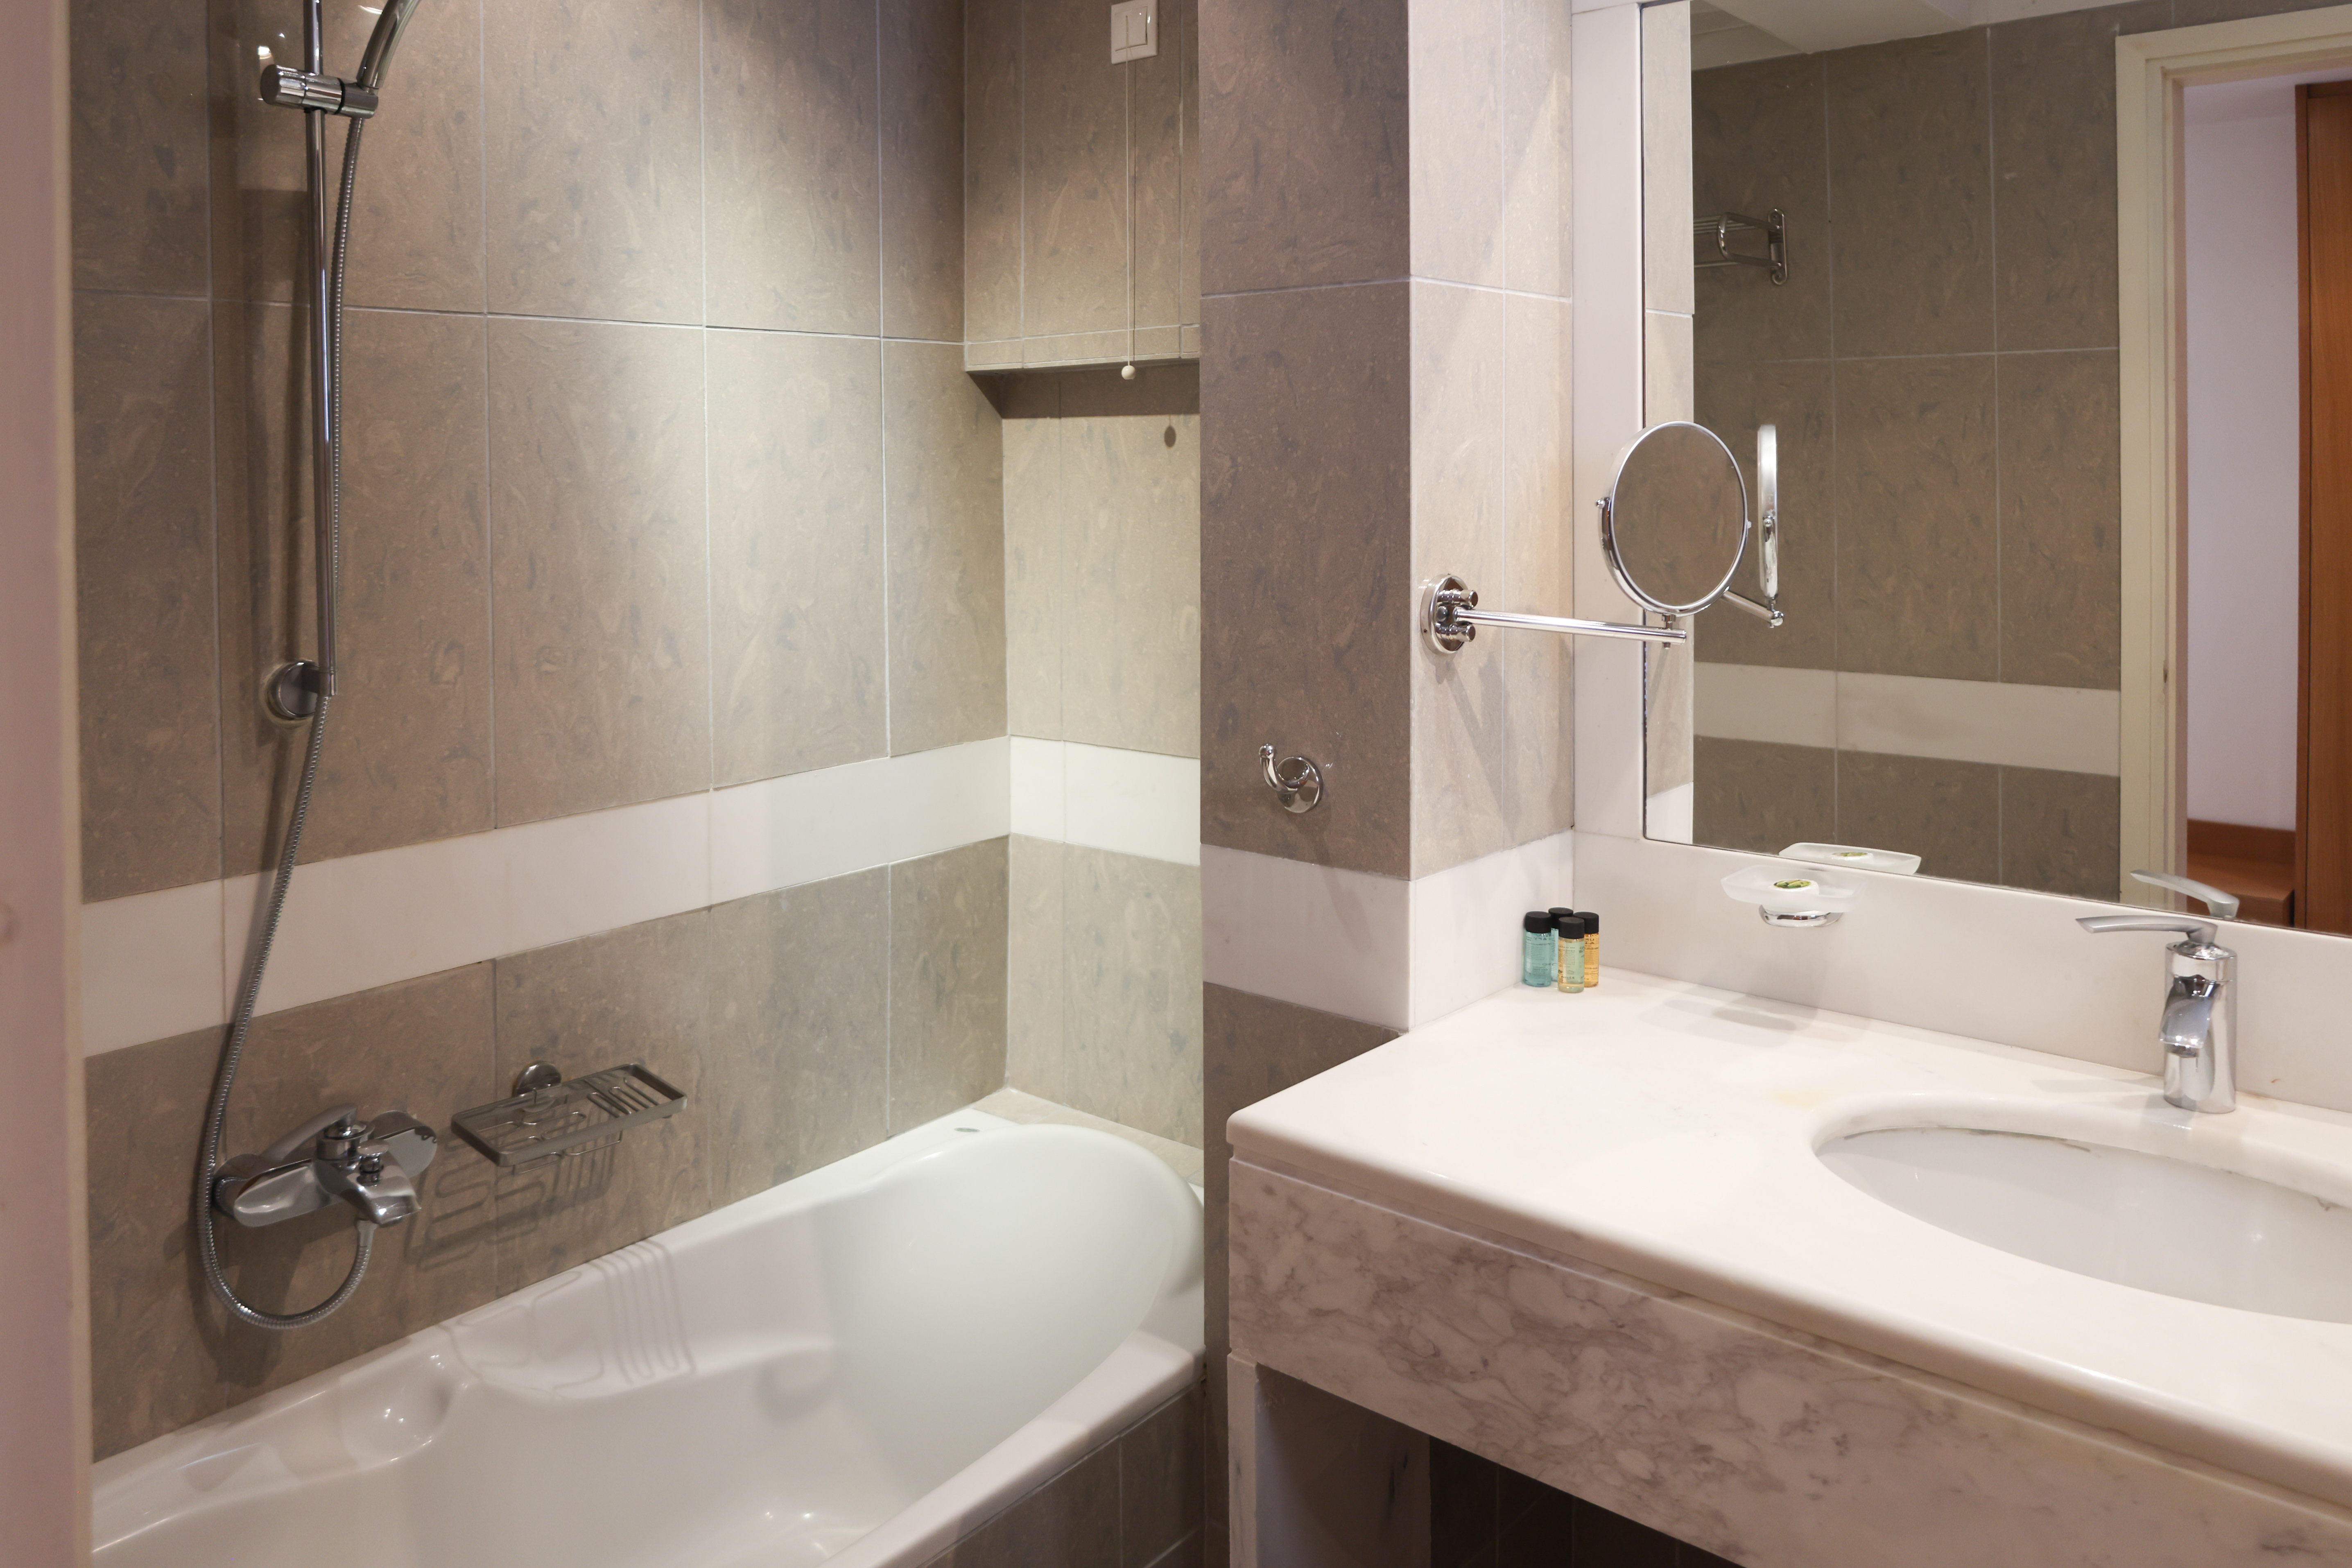     Kanapitsa Mare Hotel Standard Double Room Bathroom